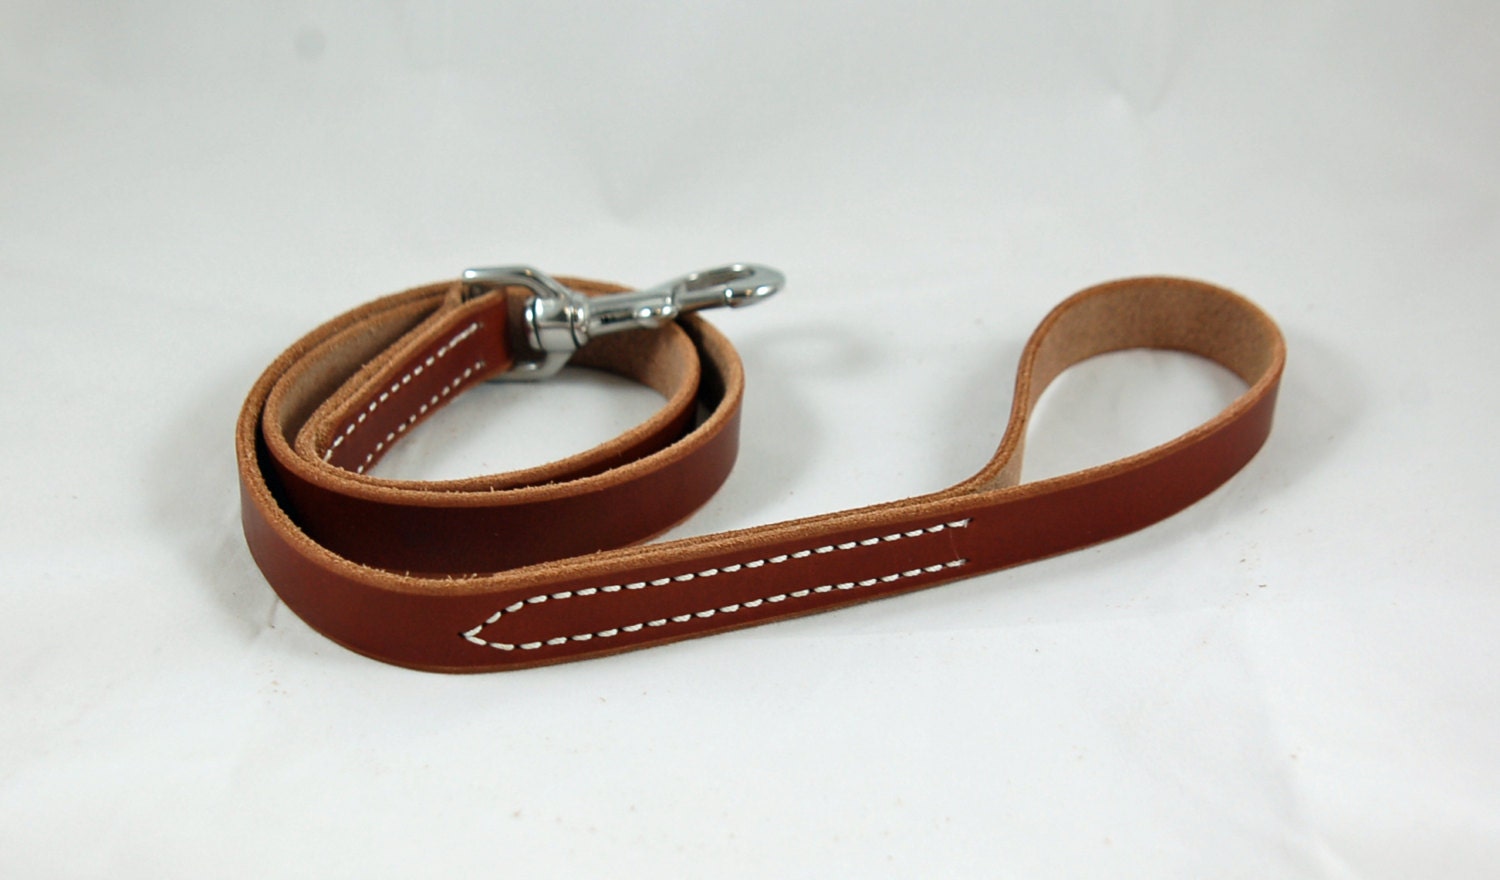 Braid Leather Dog Leash or Lead Real Genuine Leather Dark Brown